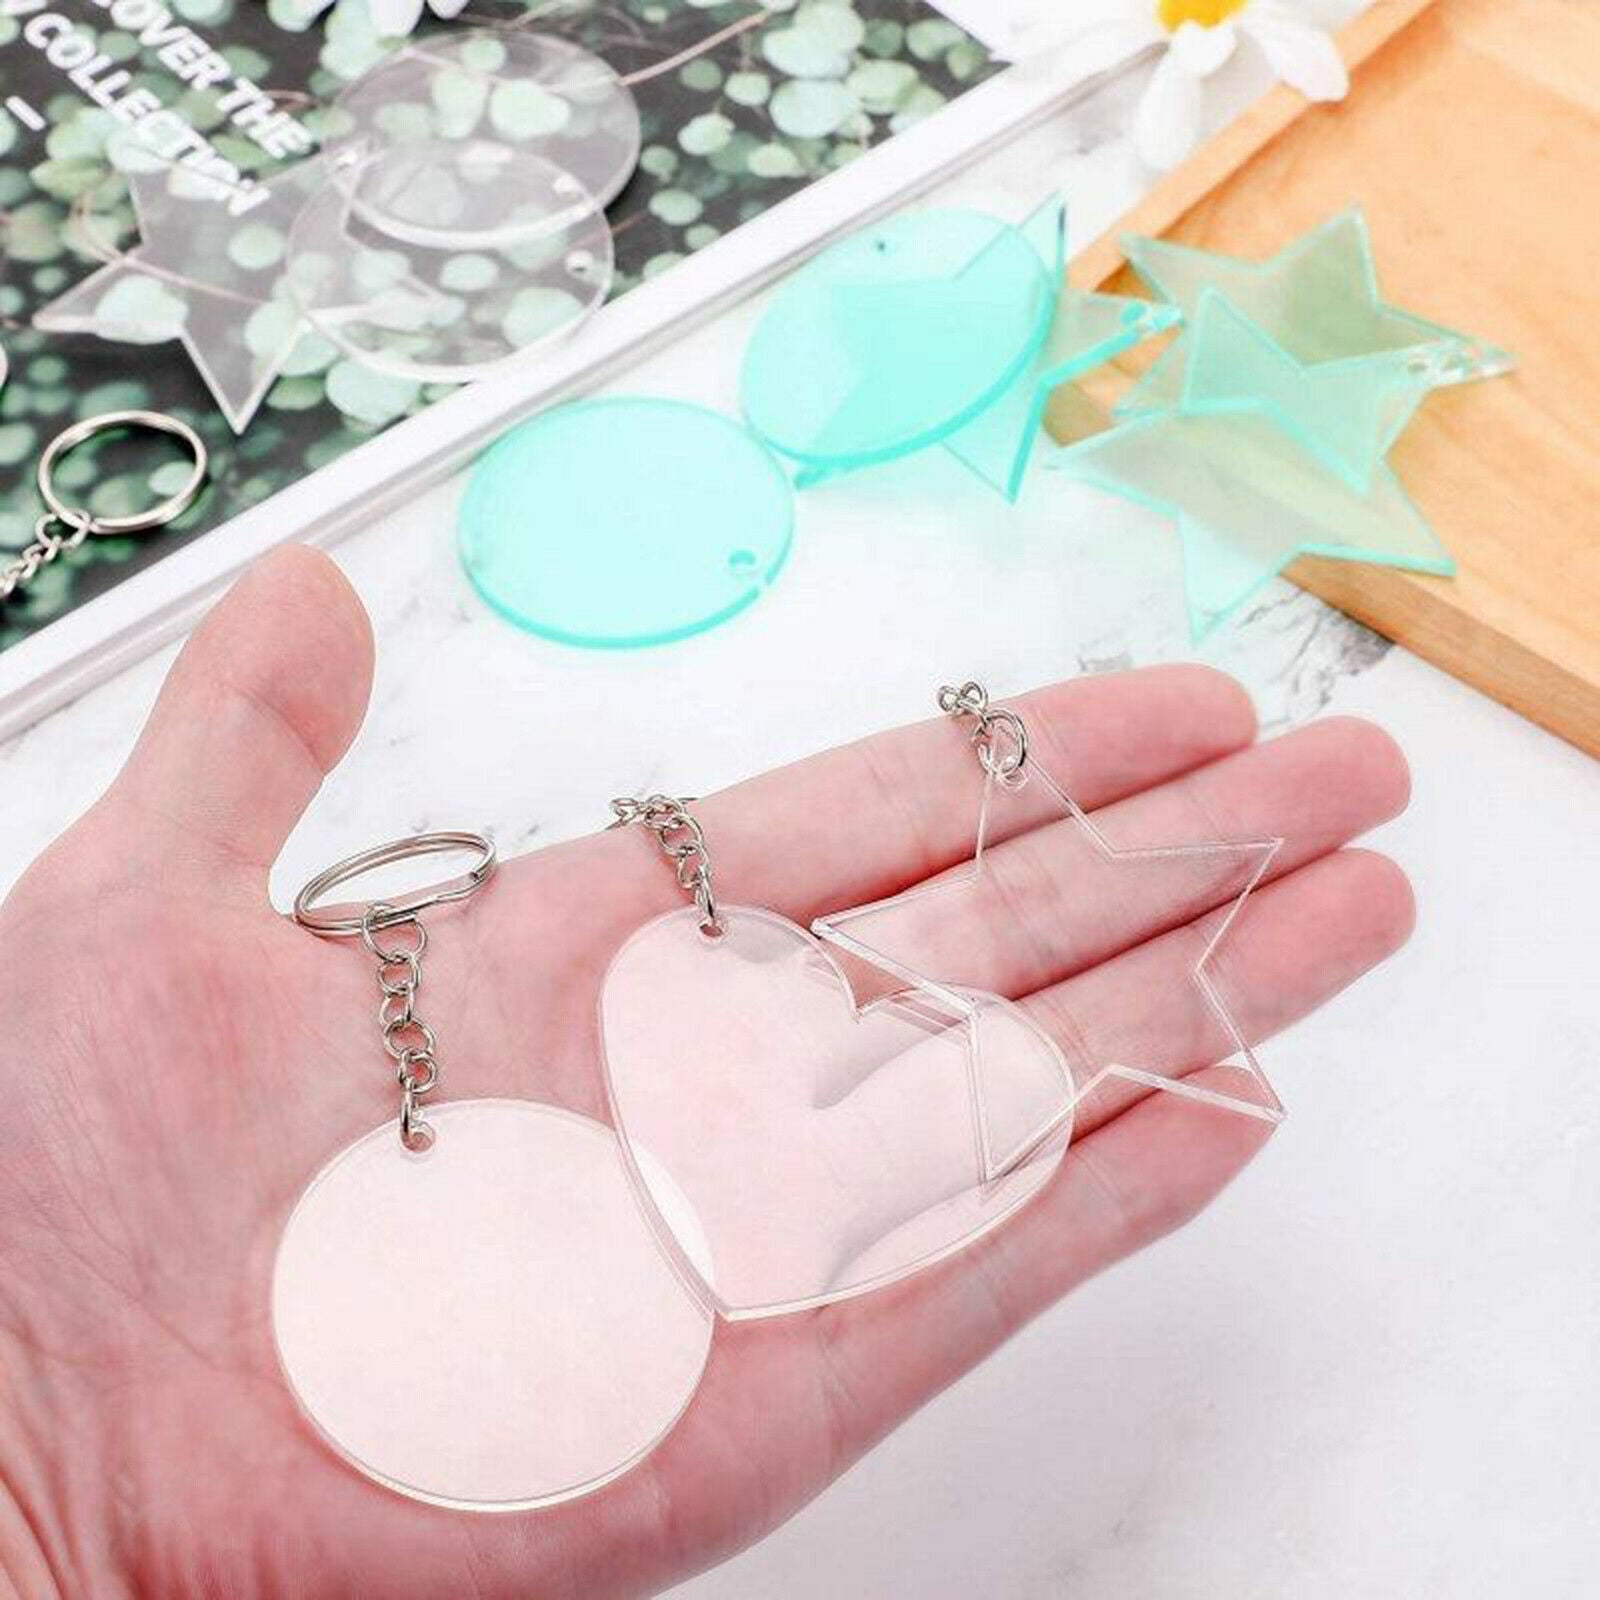 24pcs Acrylic Clear Discs Blanks Keychain with Tassels Pendants Set DIY Craft